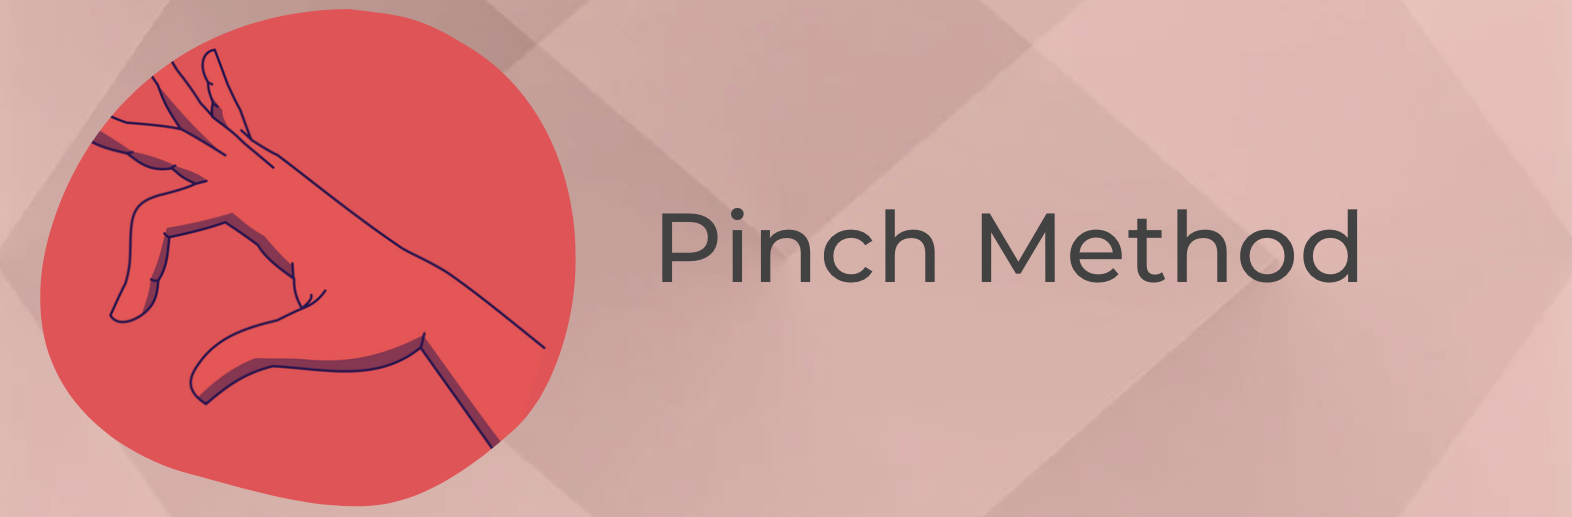 pinch method for diabetes